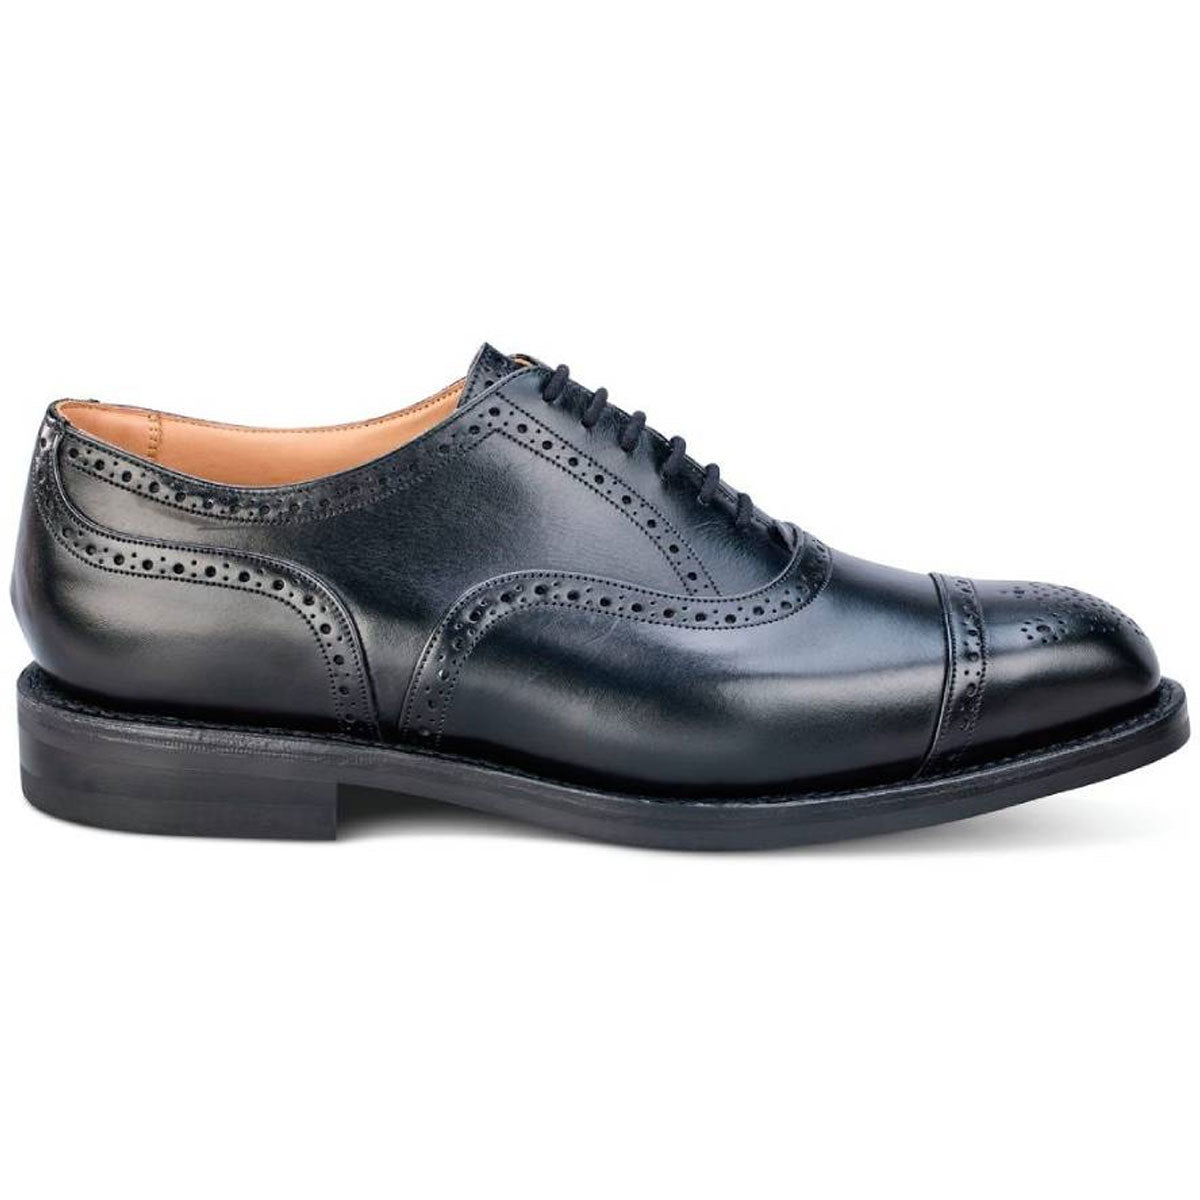 TRICKER'S Kensington Shoes - Mens - Black Calf